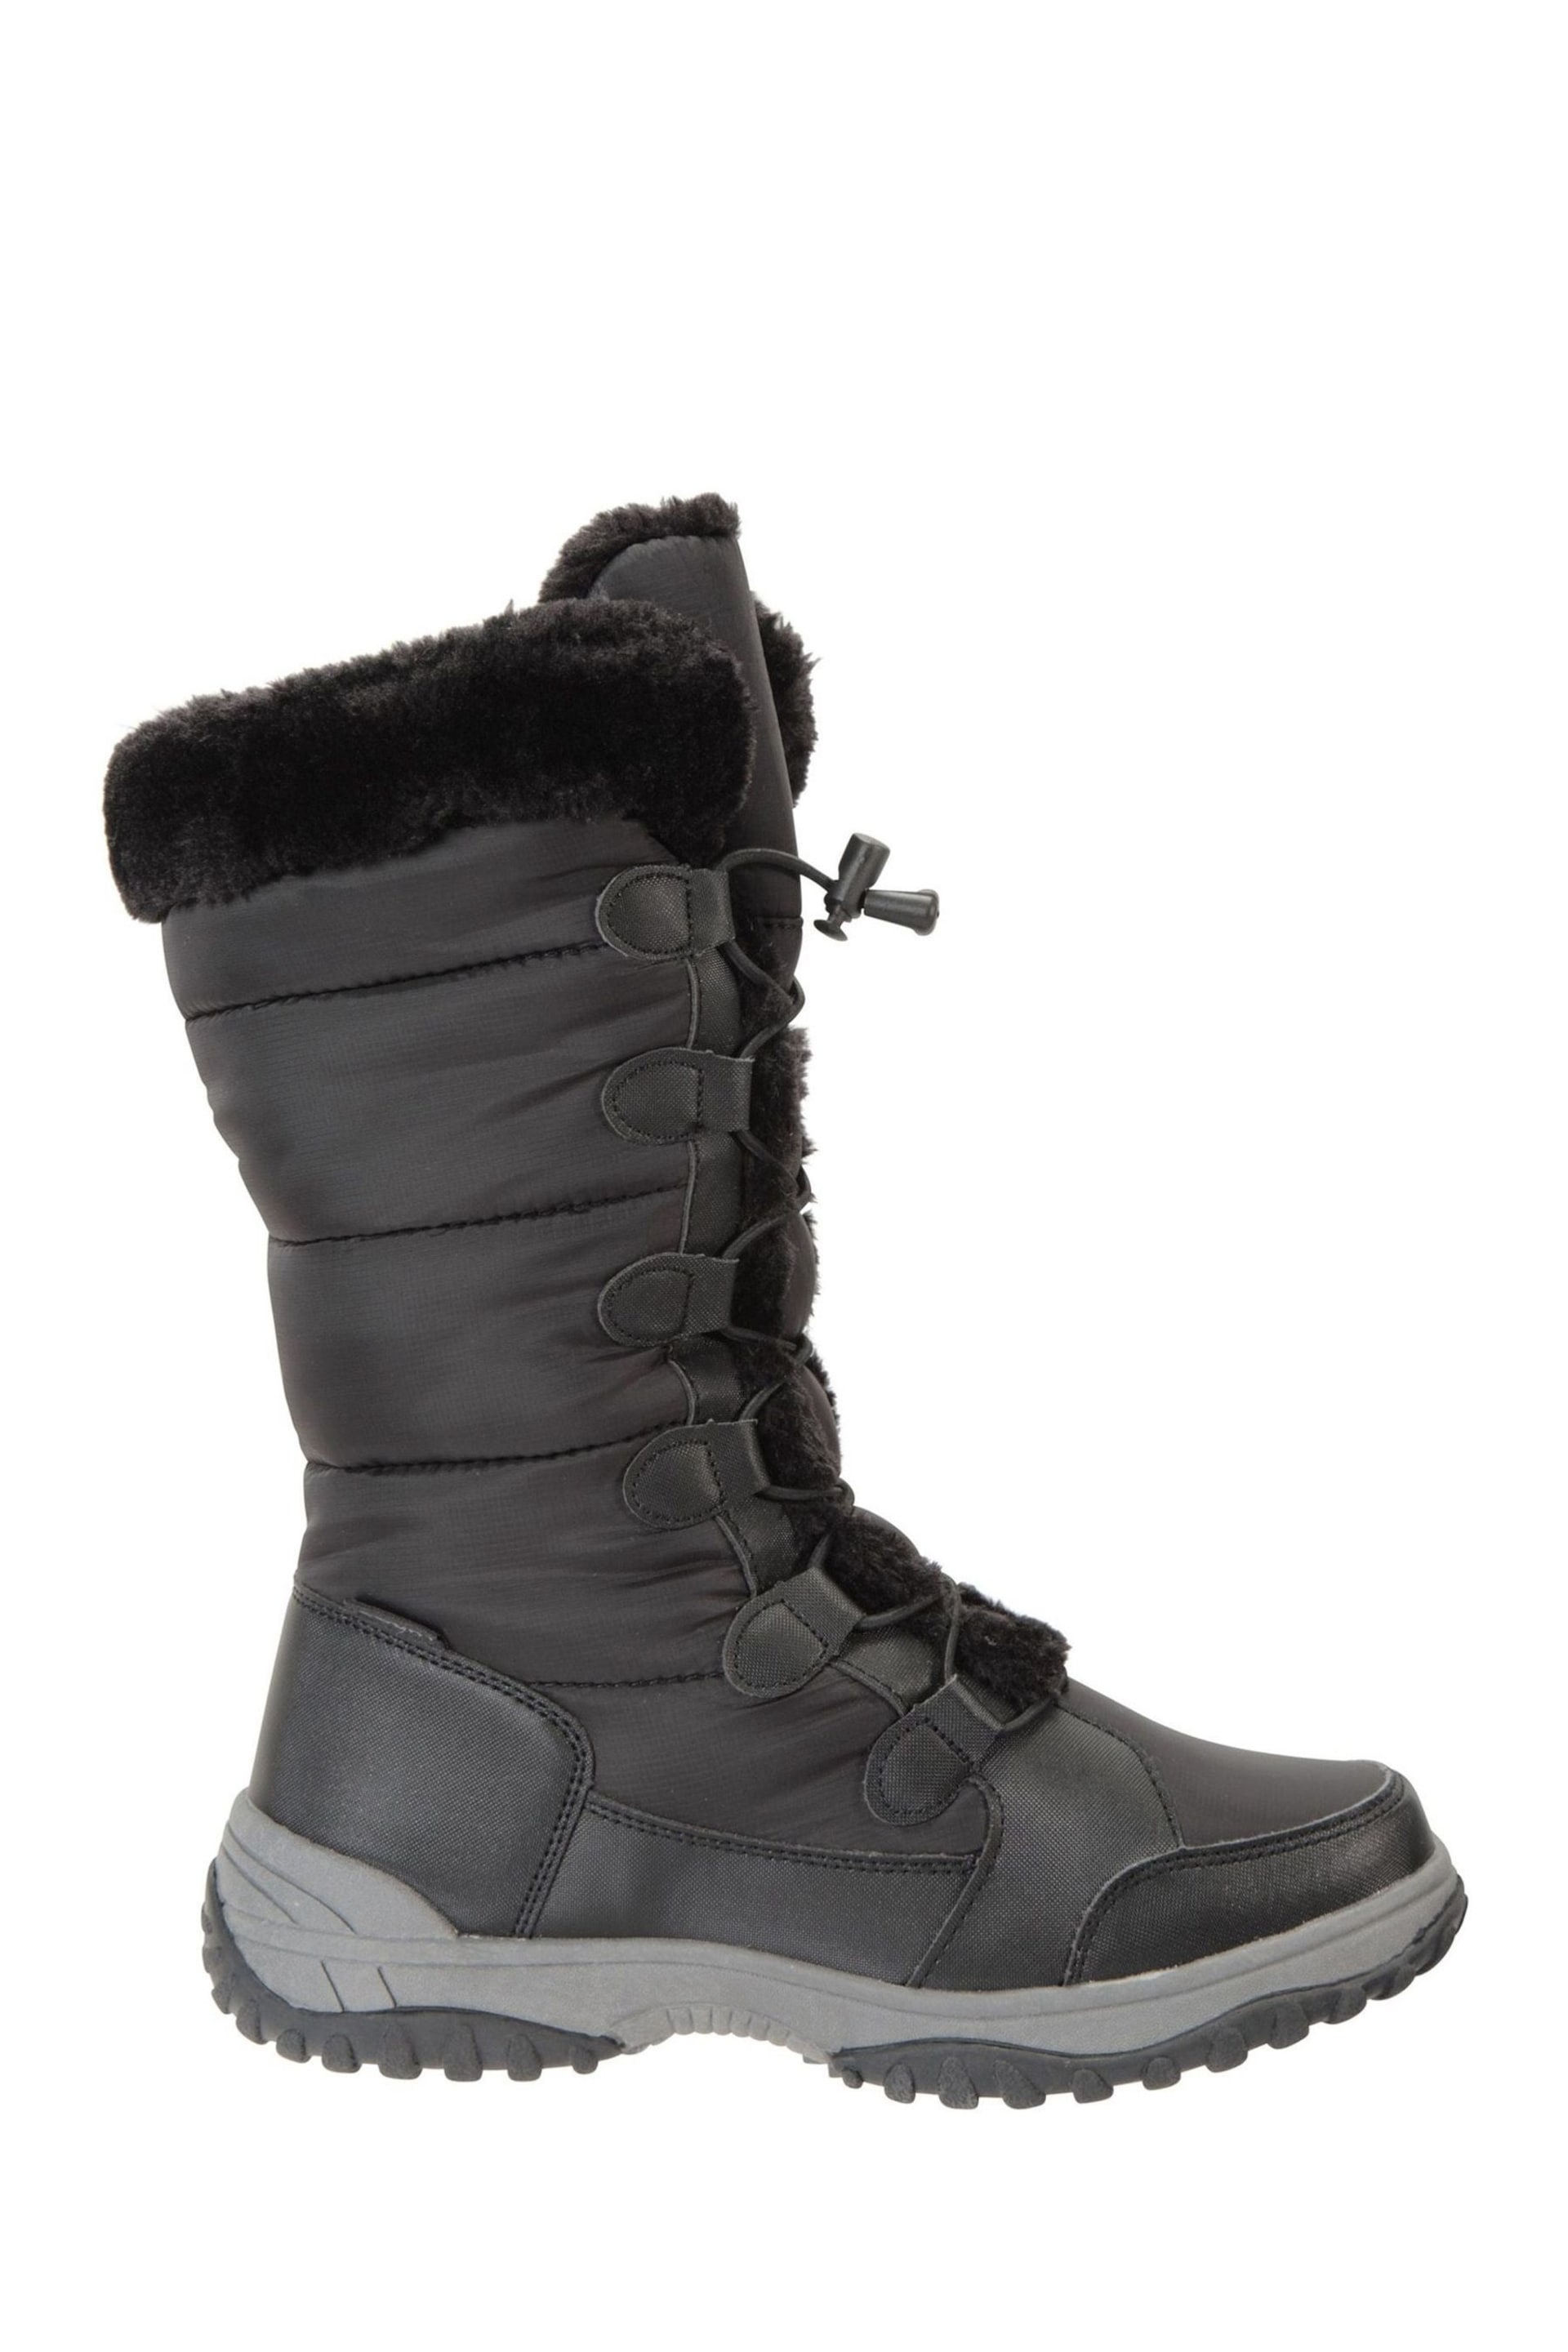 Mountain Warehouse Black Snowflake Womens Long Snow Walking Boots - Image 1 of 5